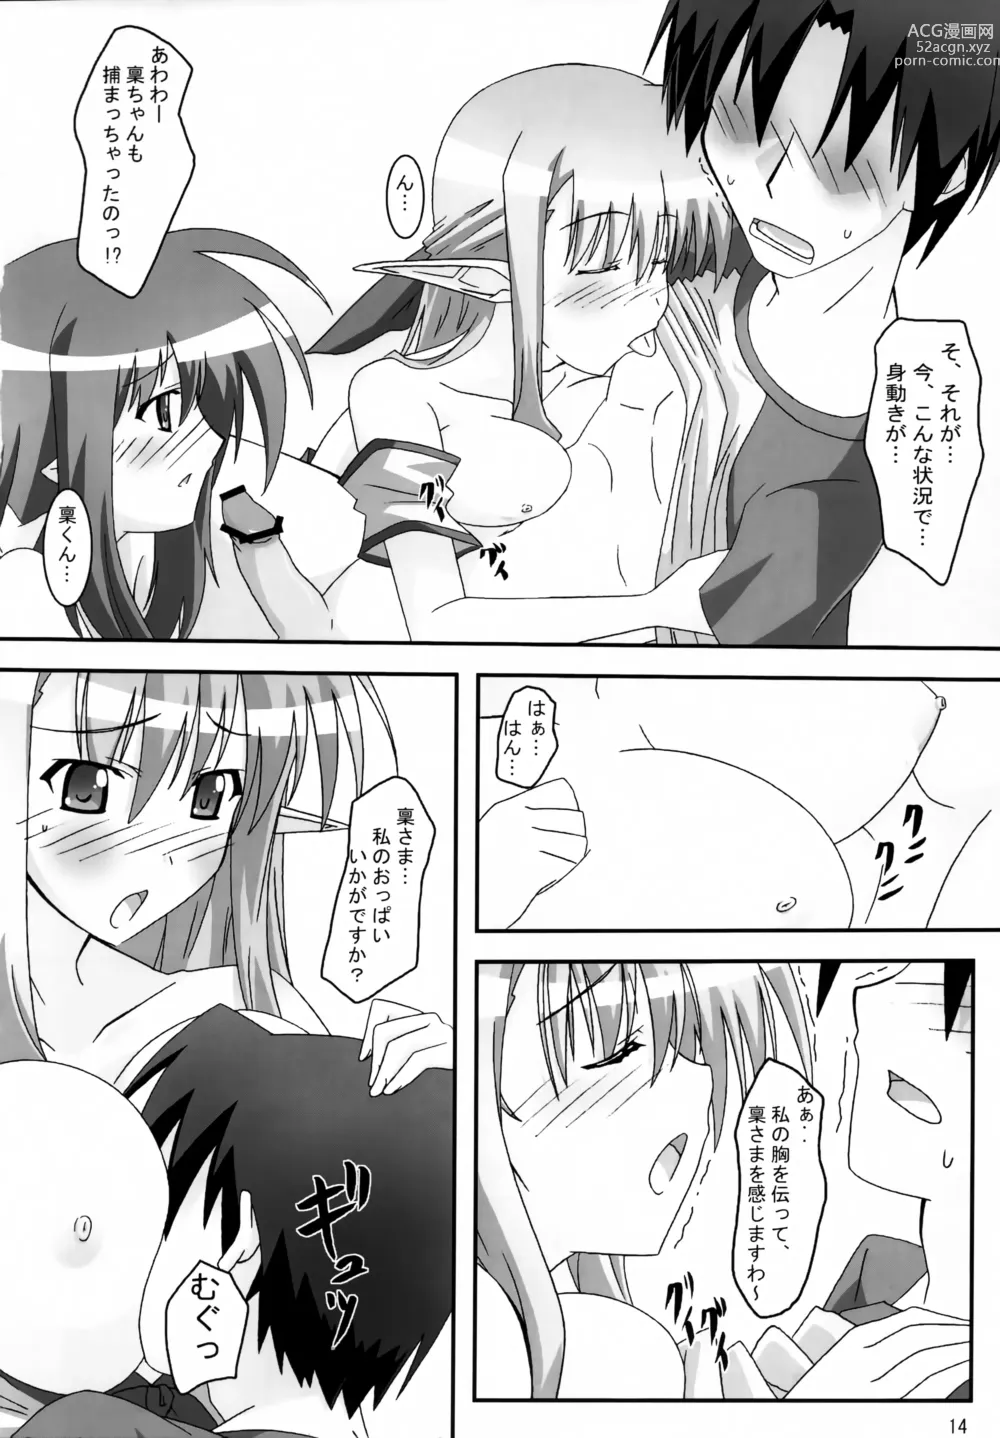 Page 13 of doujinshi SHUFFLE! With